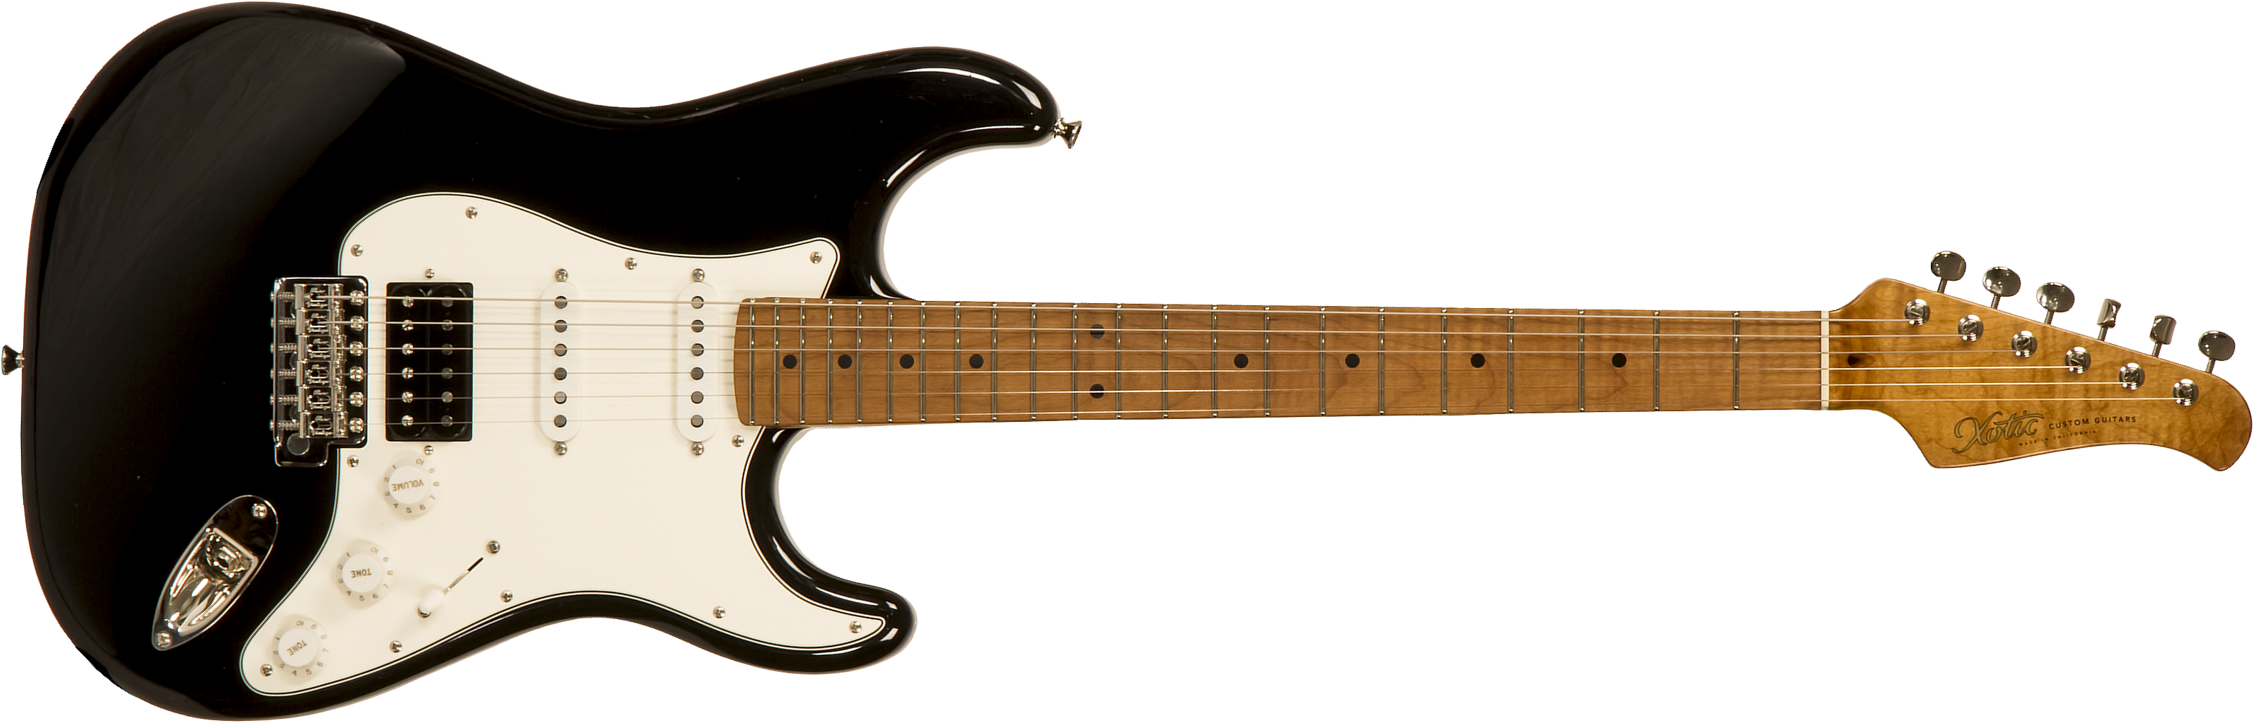 Xotic Xscpro-2 California Class Hss Mn #2113 - Light Aging Black - E-Gitarre in Str-Form - Main picture